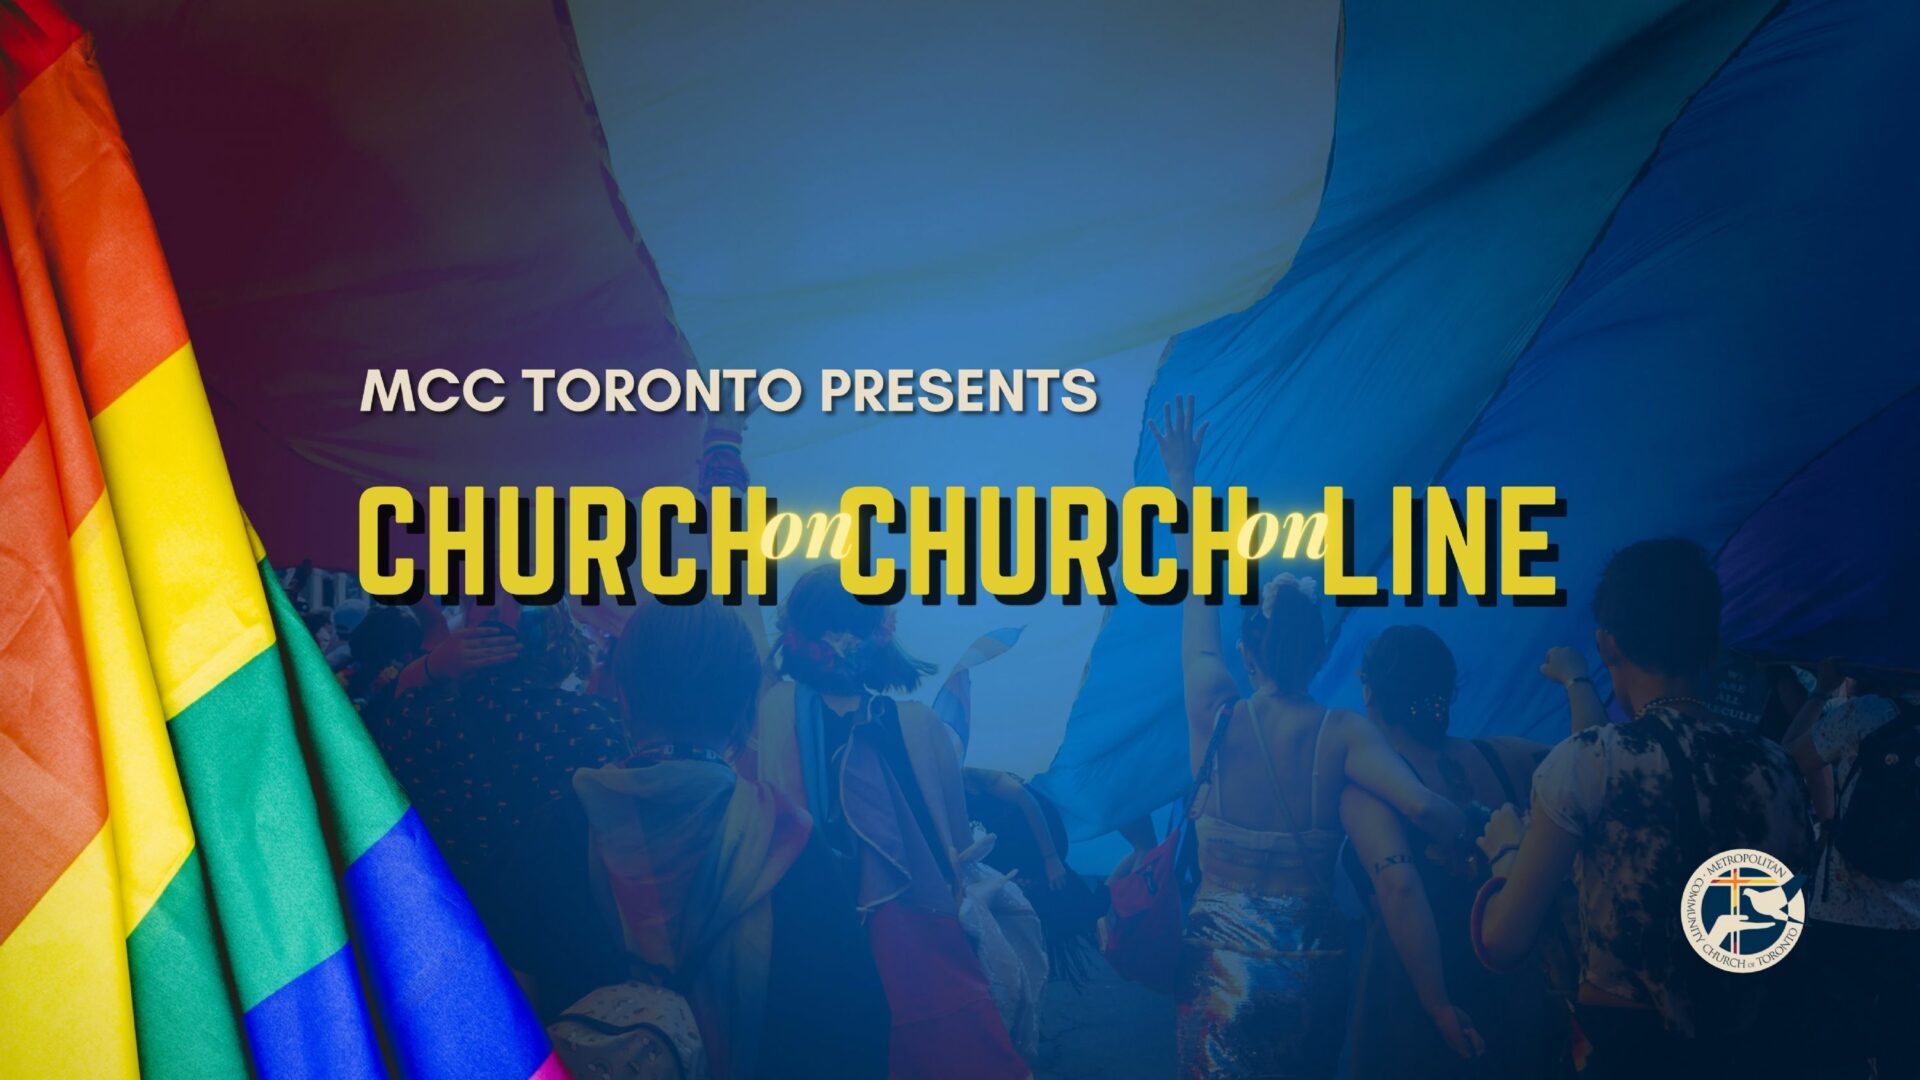 MCC Toronto Presents Church on Church online